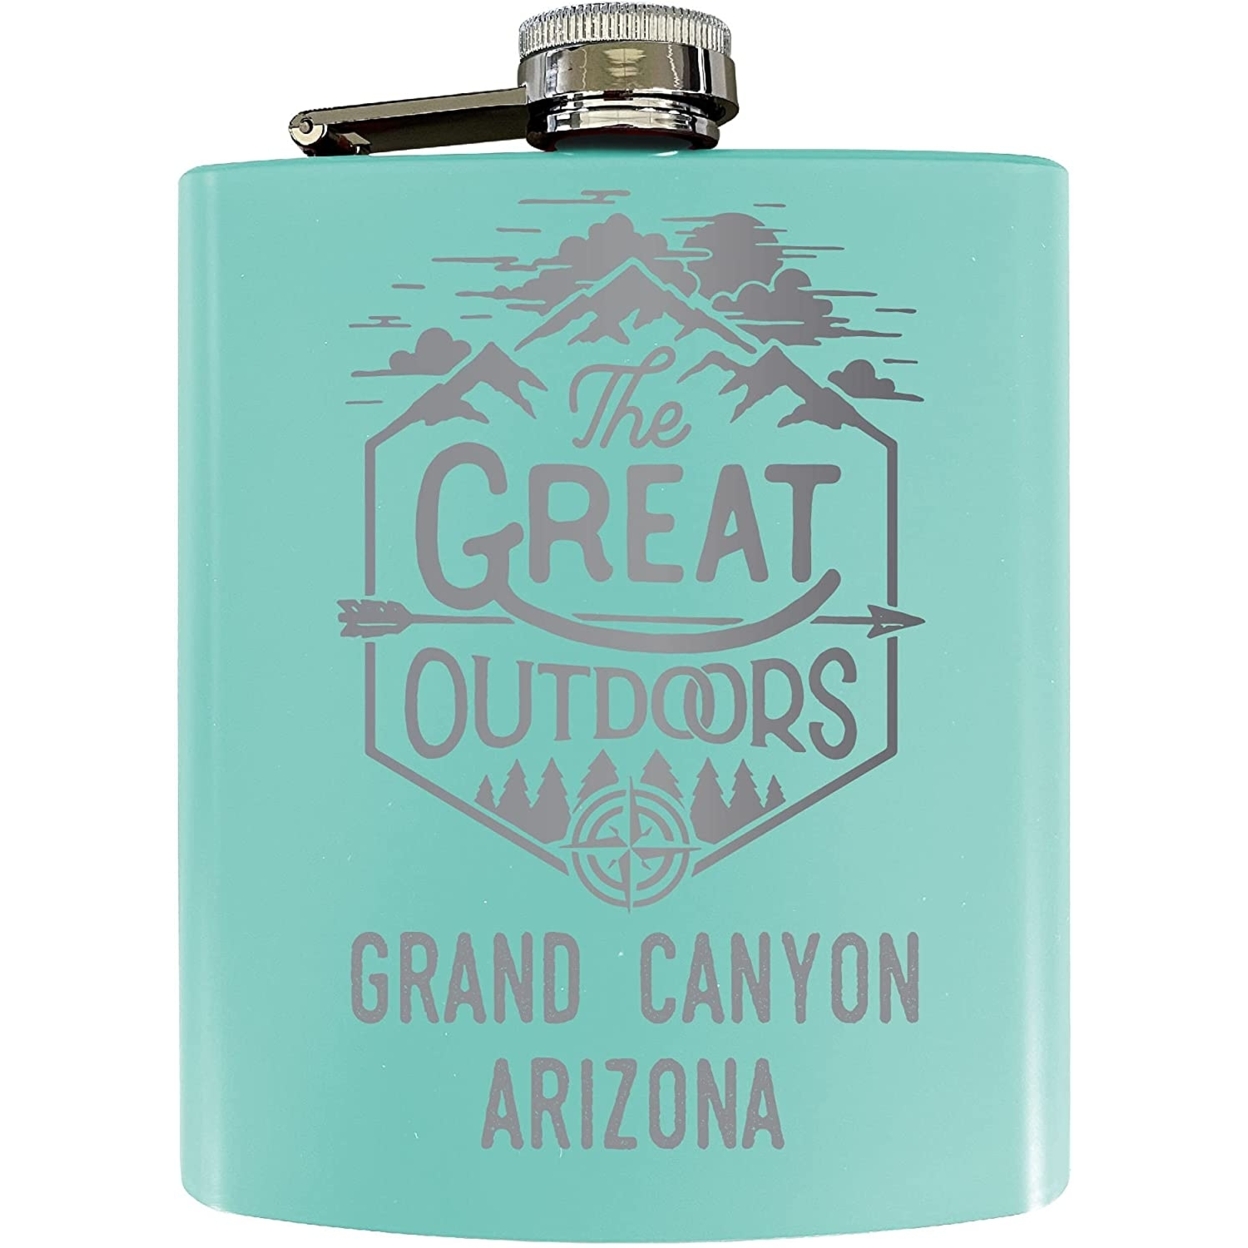 Grand Canyon Arizona Laser Engraved Explore The Outdoors Souvenir 7 Oz Stainless Steel Flask - Seafoam